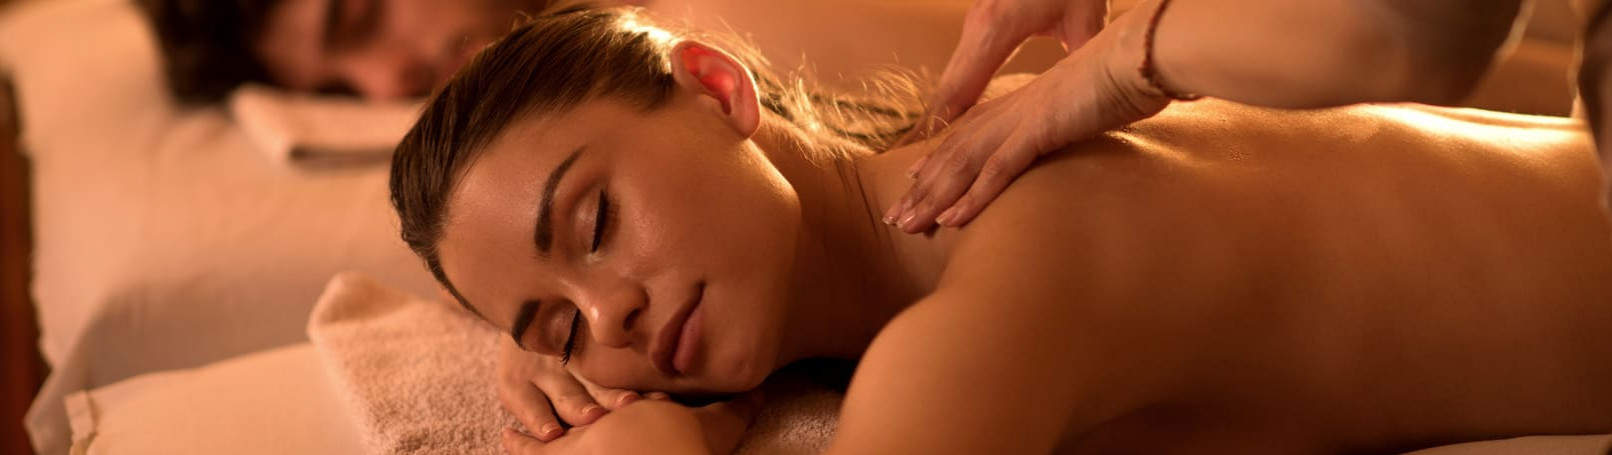 Elemis massage at killeavy spa www.killeavycastle.com_v2